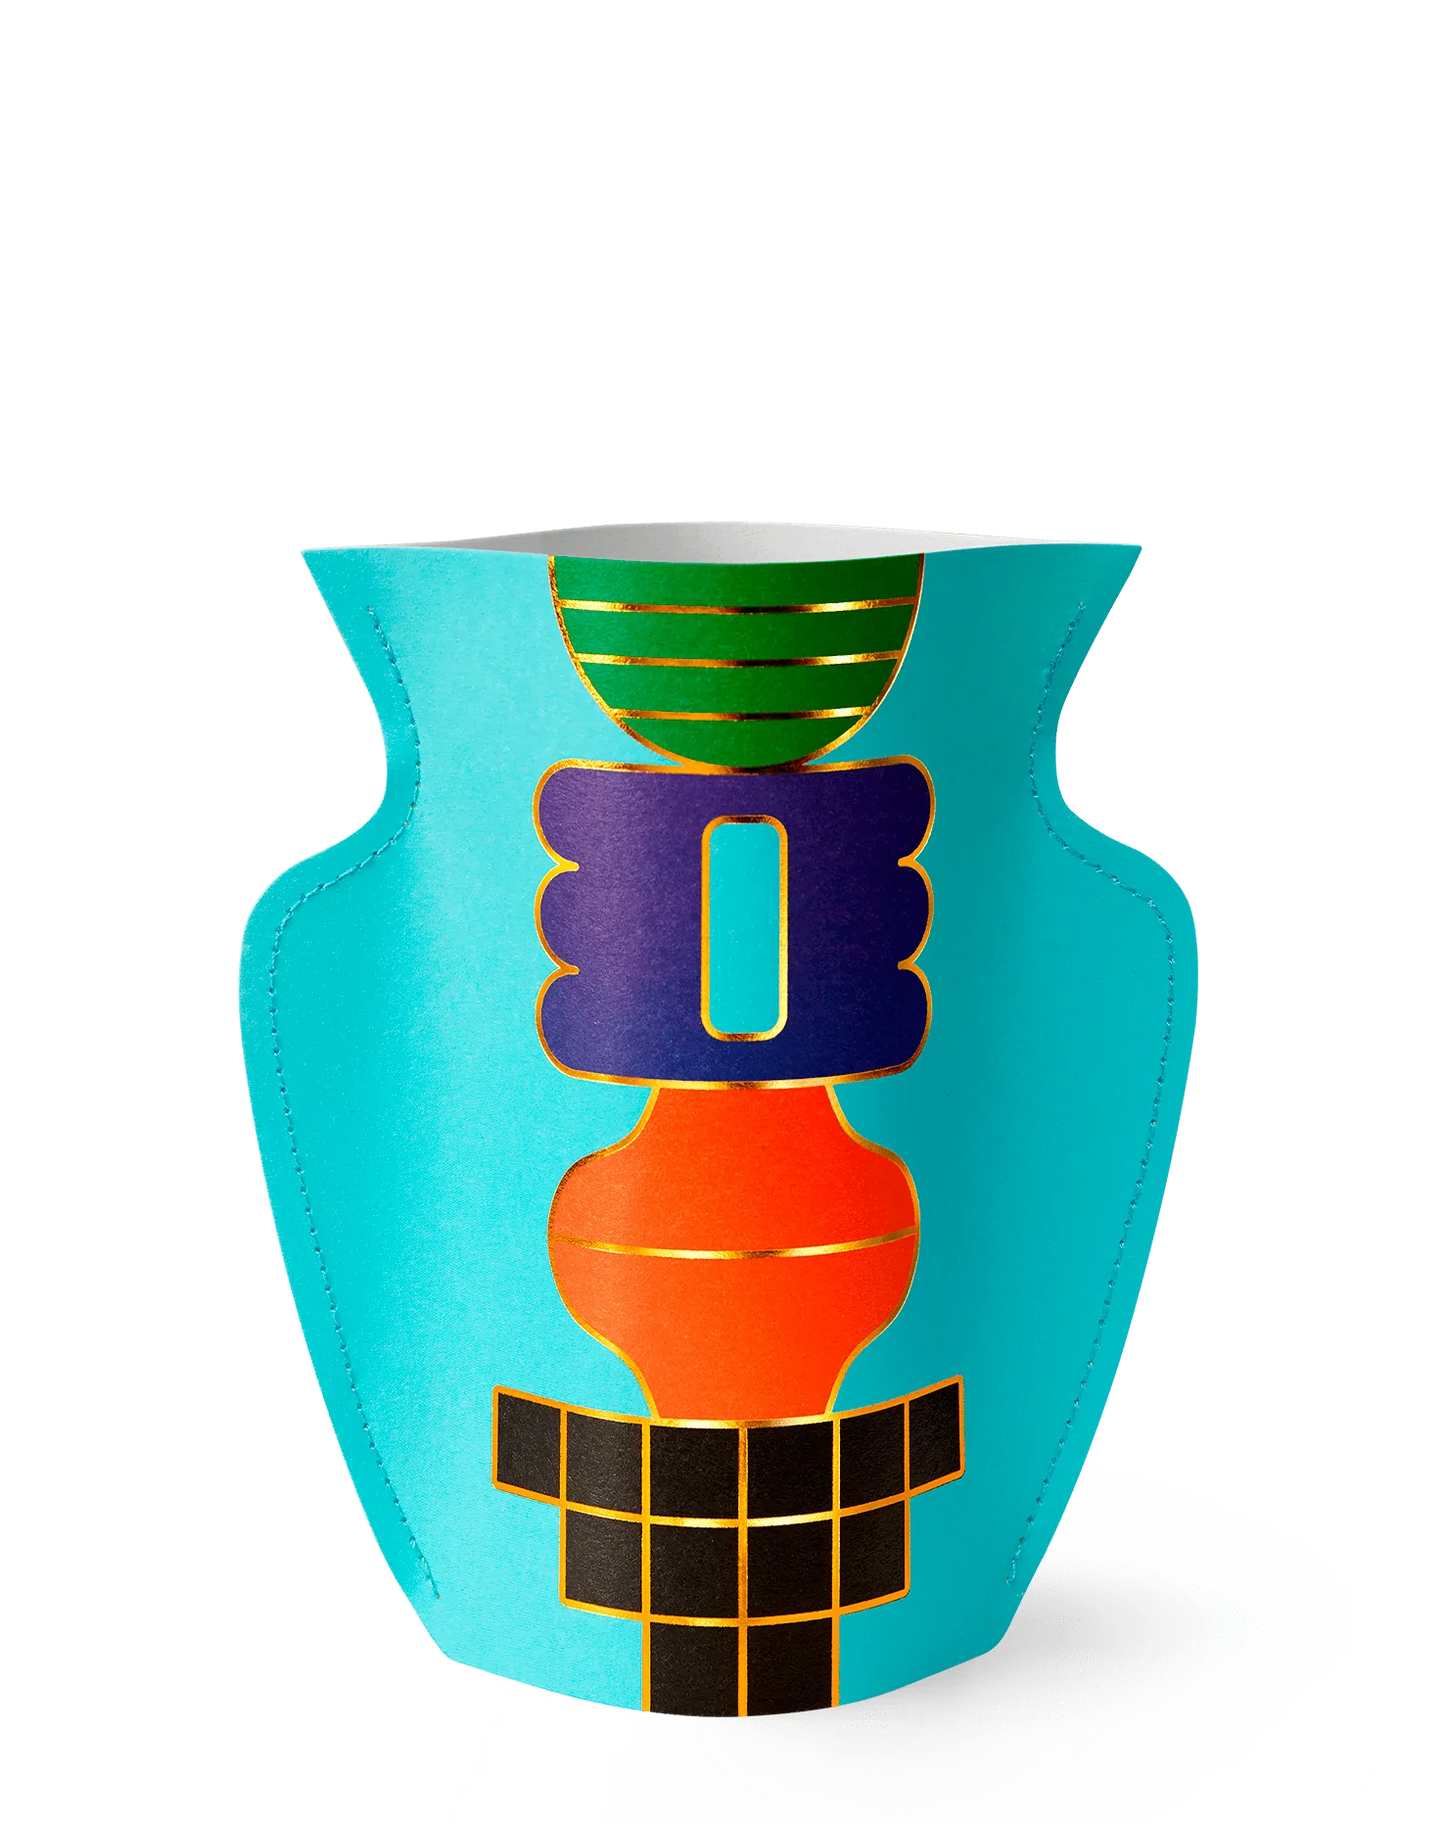 Octaevo, 12" and 7" Paper Vases